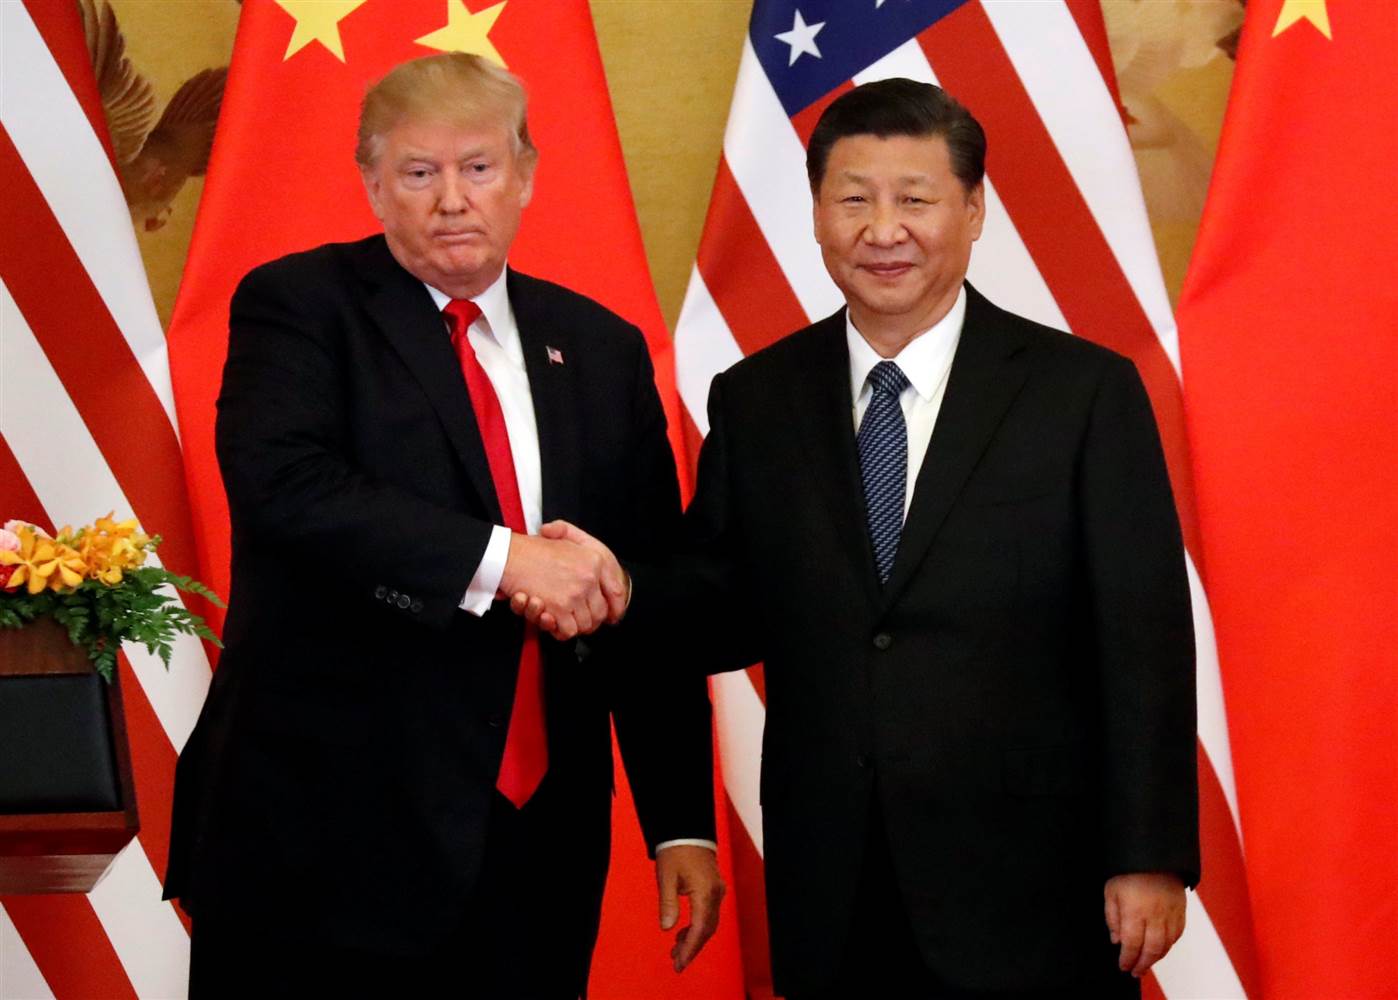 President Trump Offers To Help China With Coronavirus